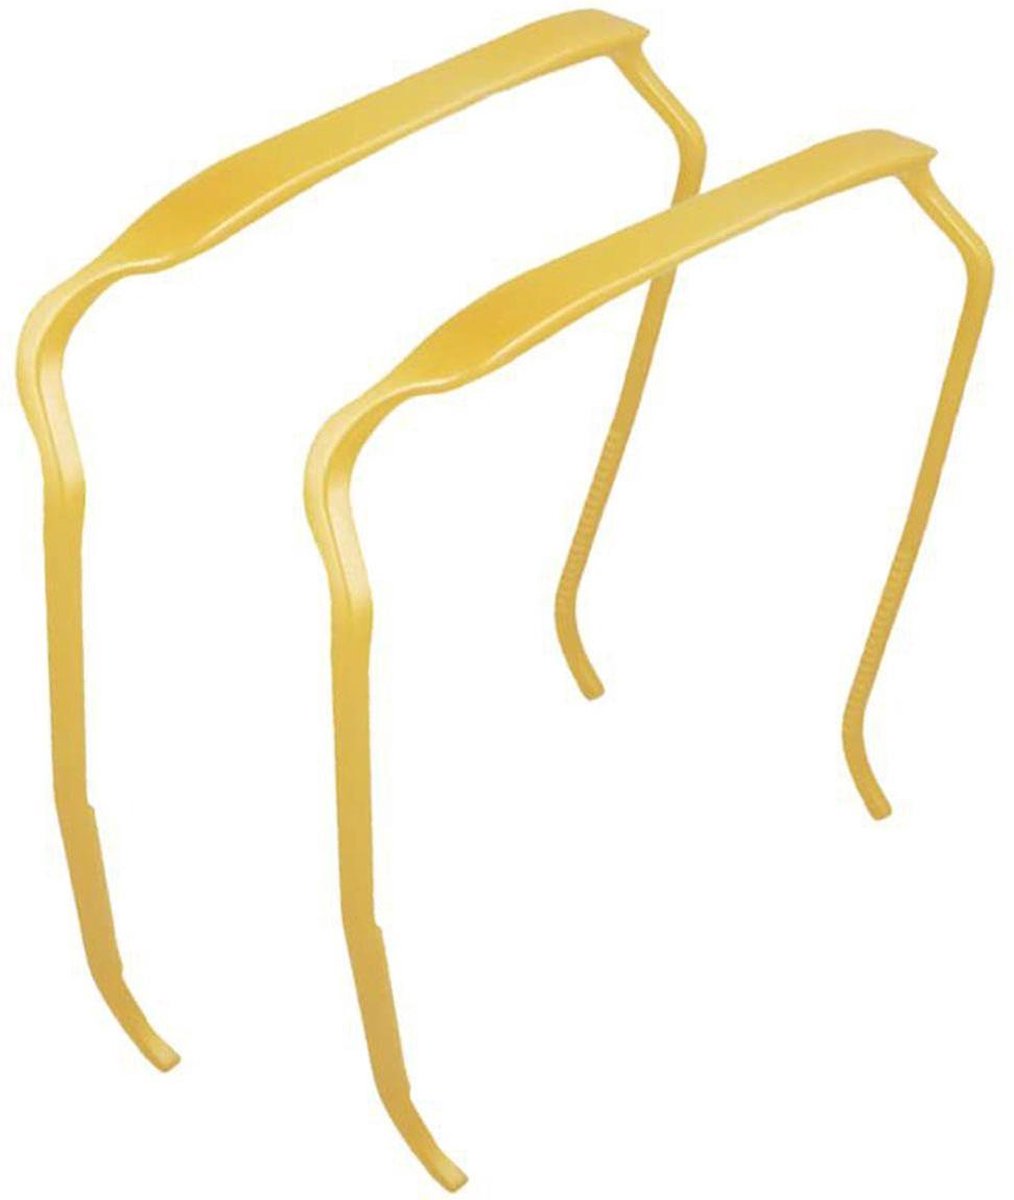 Zonnebril Haarband - Set van 2 - Zonnebril Haarband Effect - Haarband Zonnebril - Haarband- Haarbanden- 2 stuks - Geel